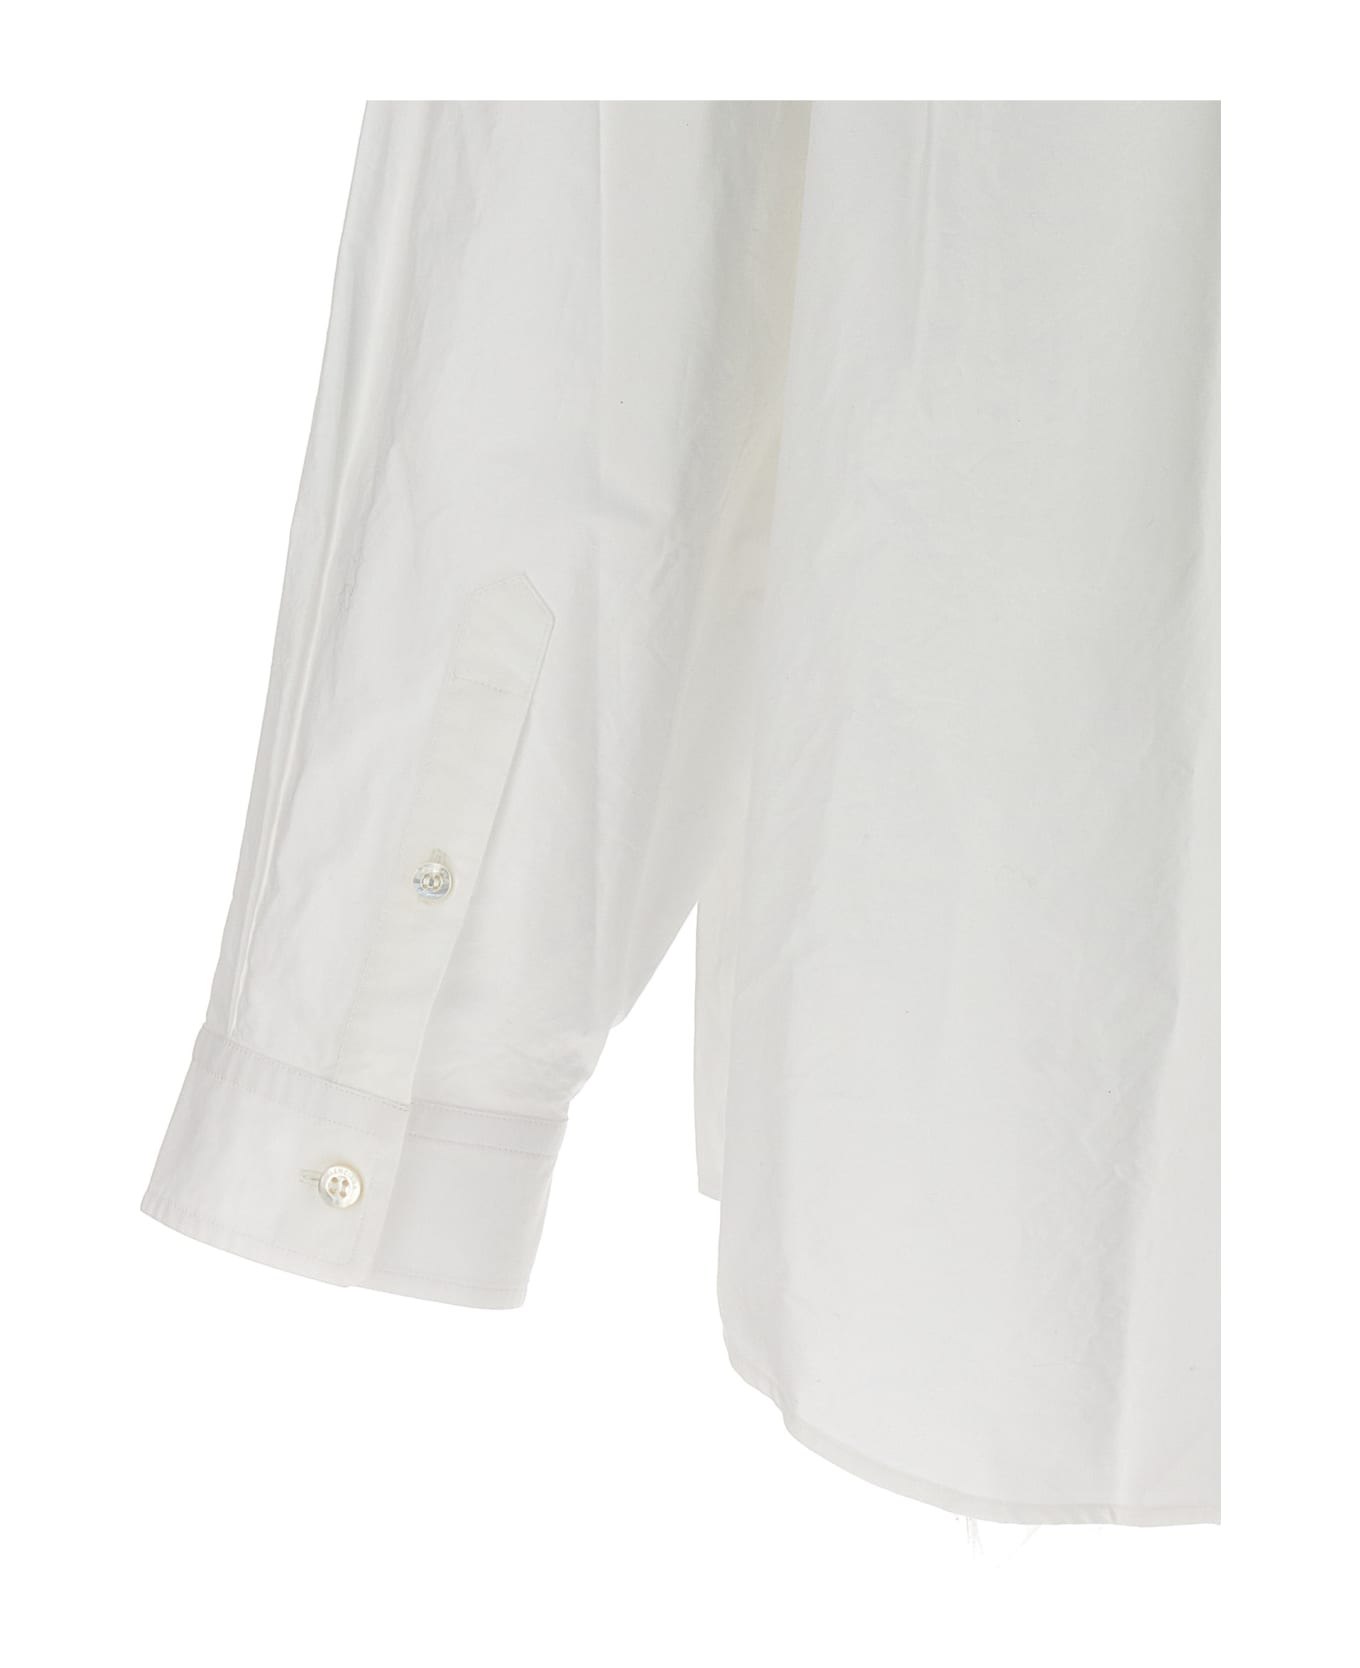 Balenciaga Oversized Shirt - WHITE